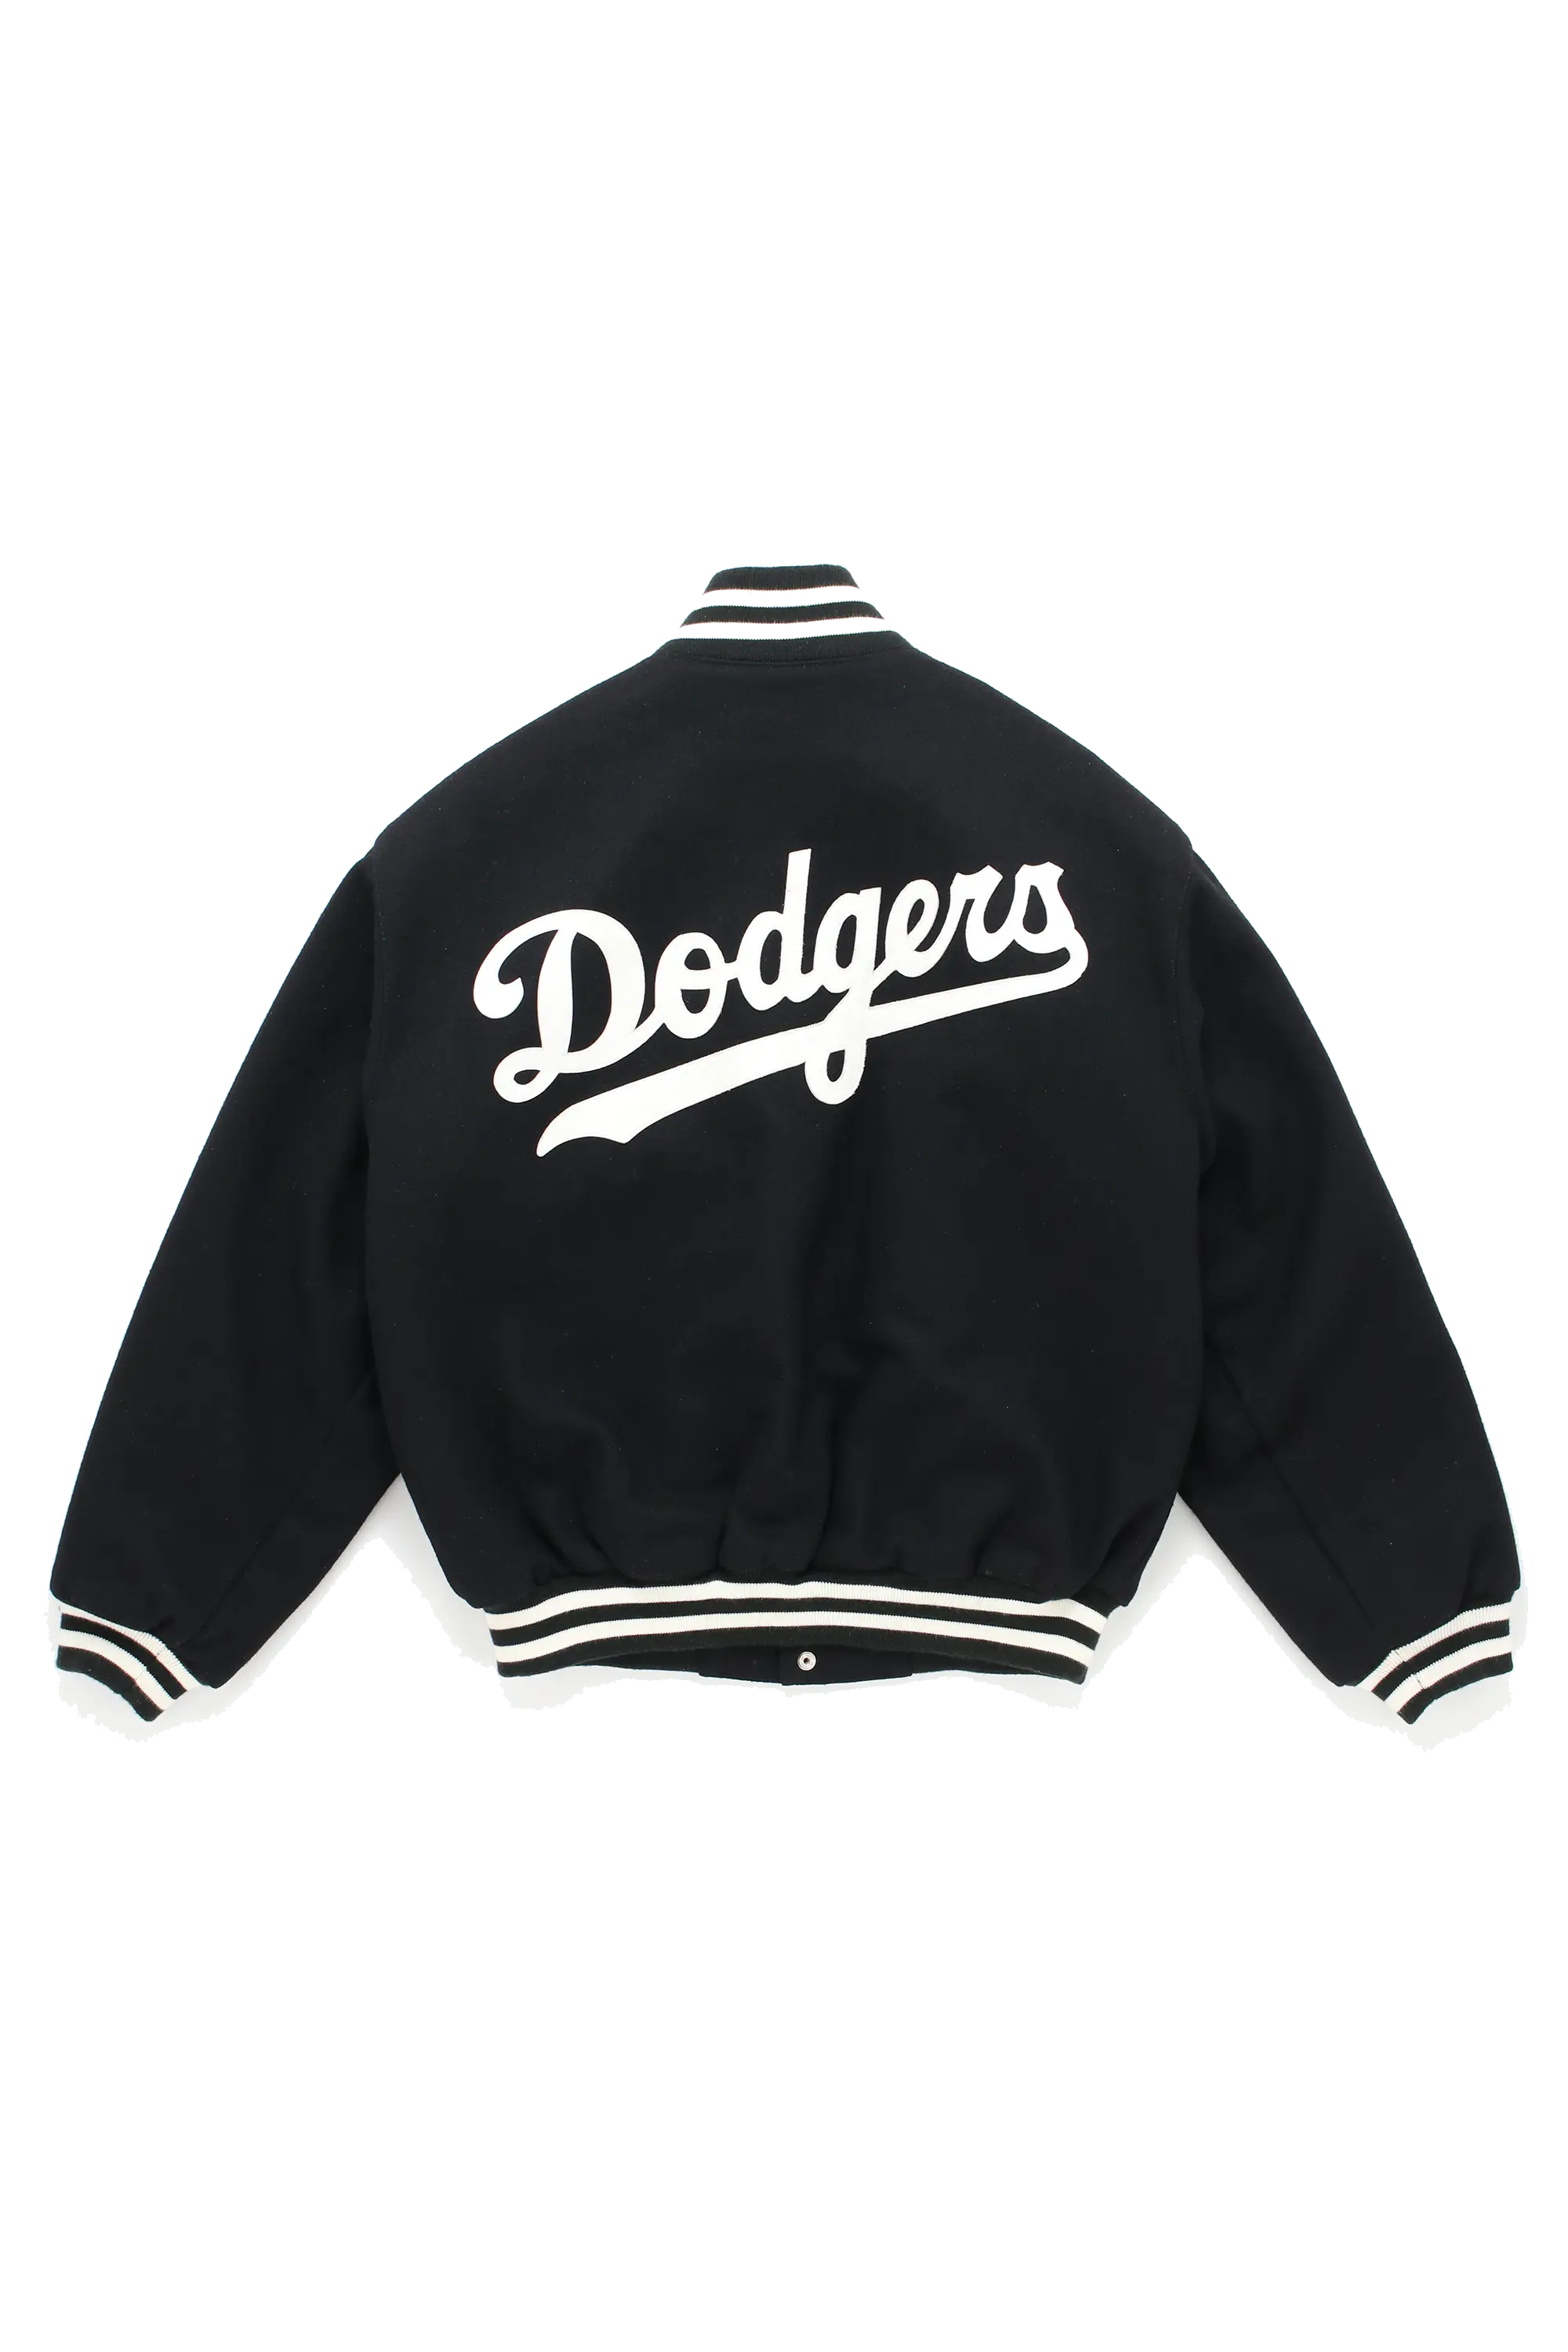 Jeff Hamilton LA Dodgers Jacket